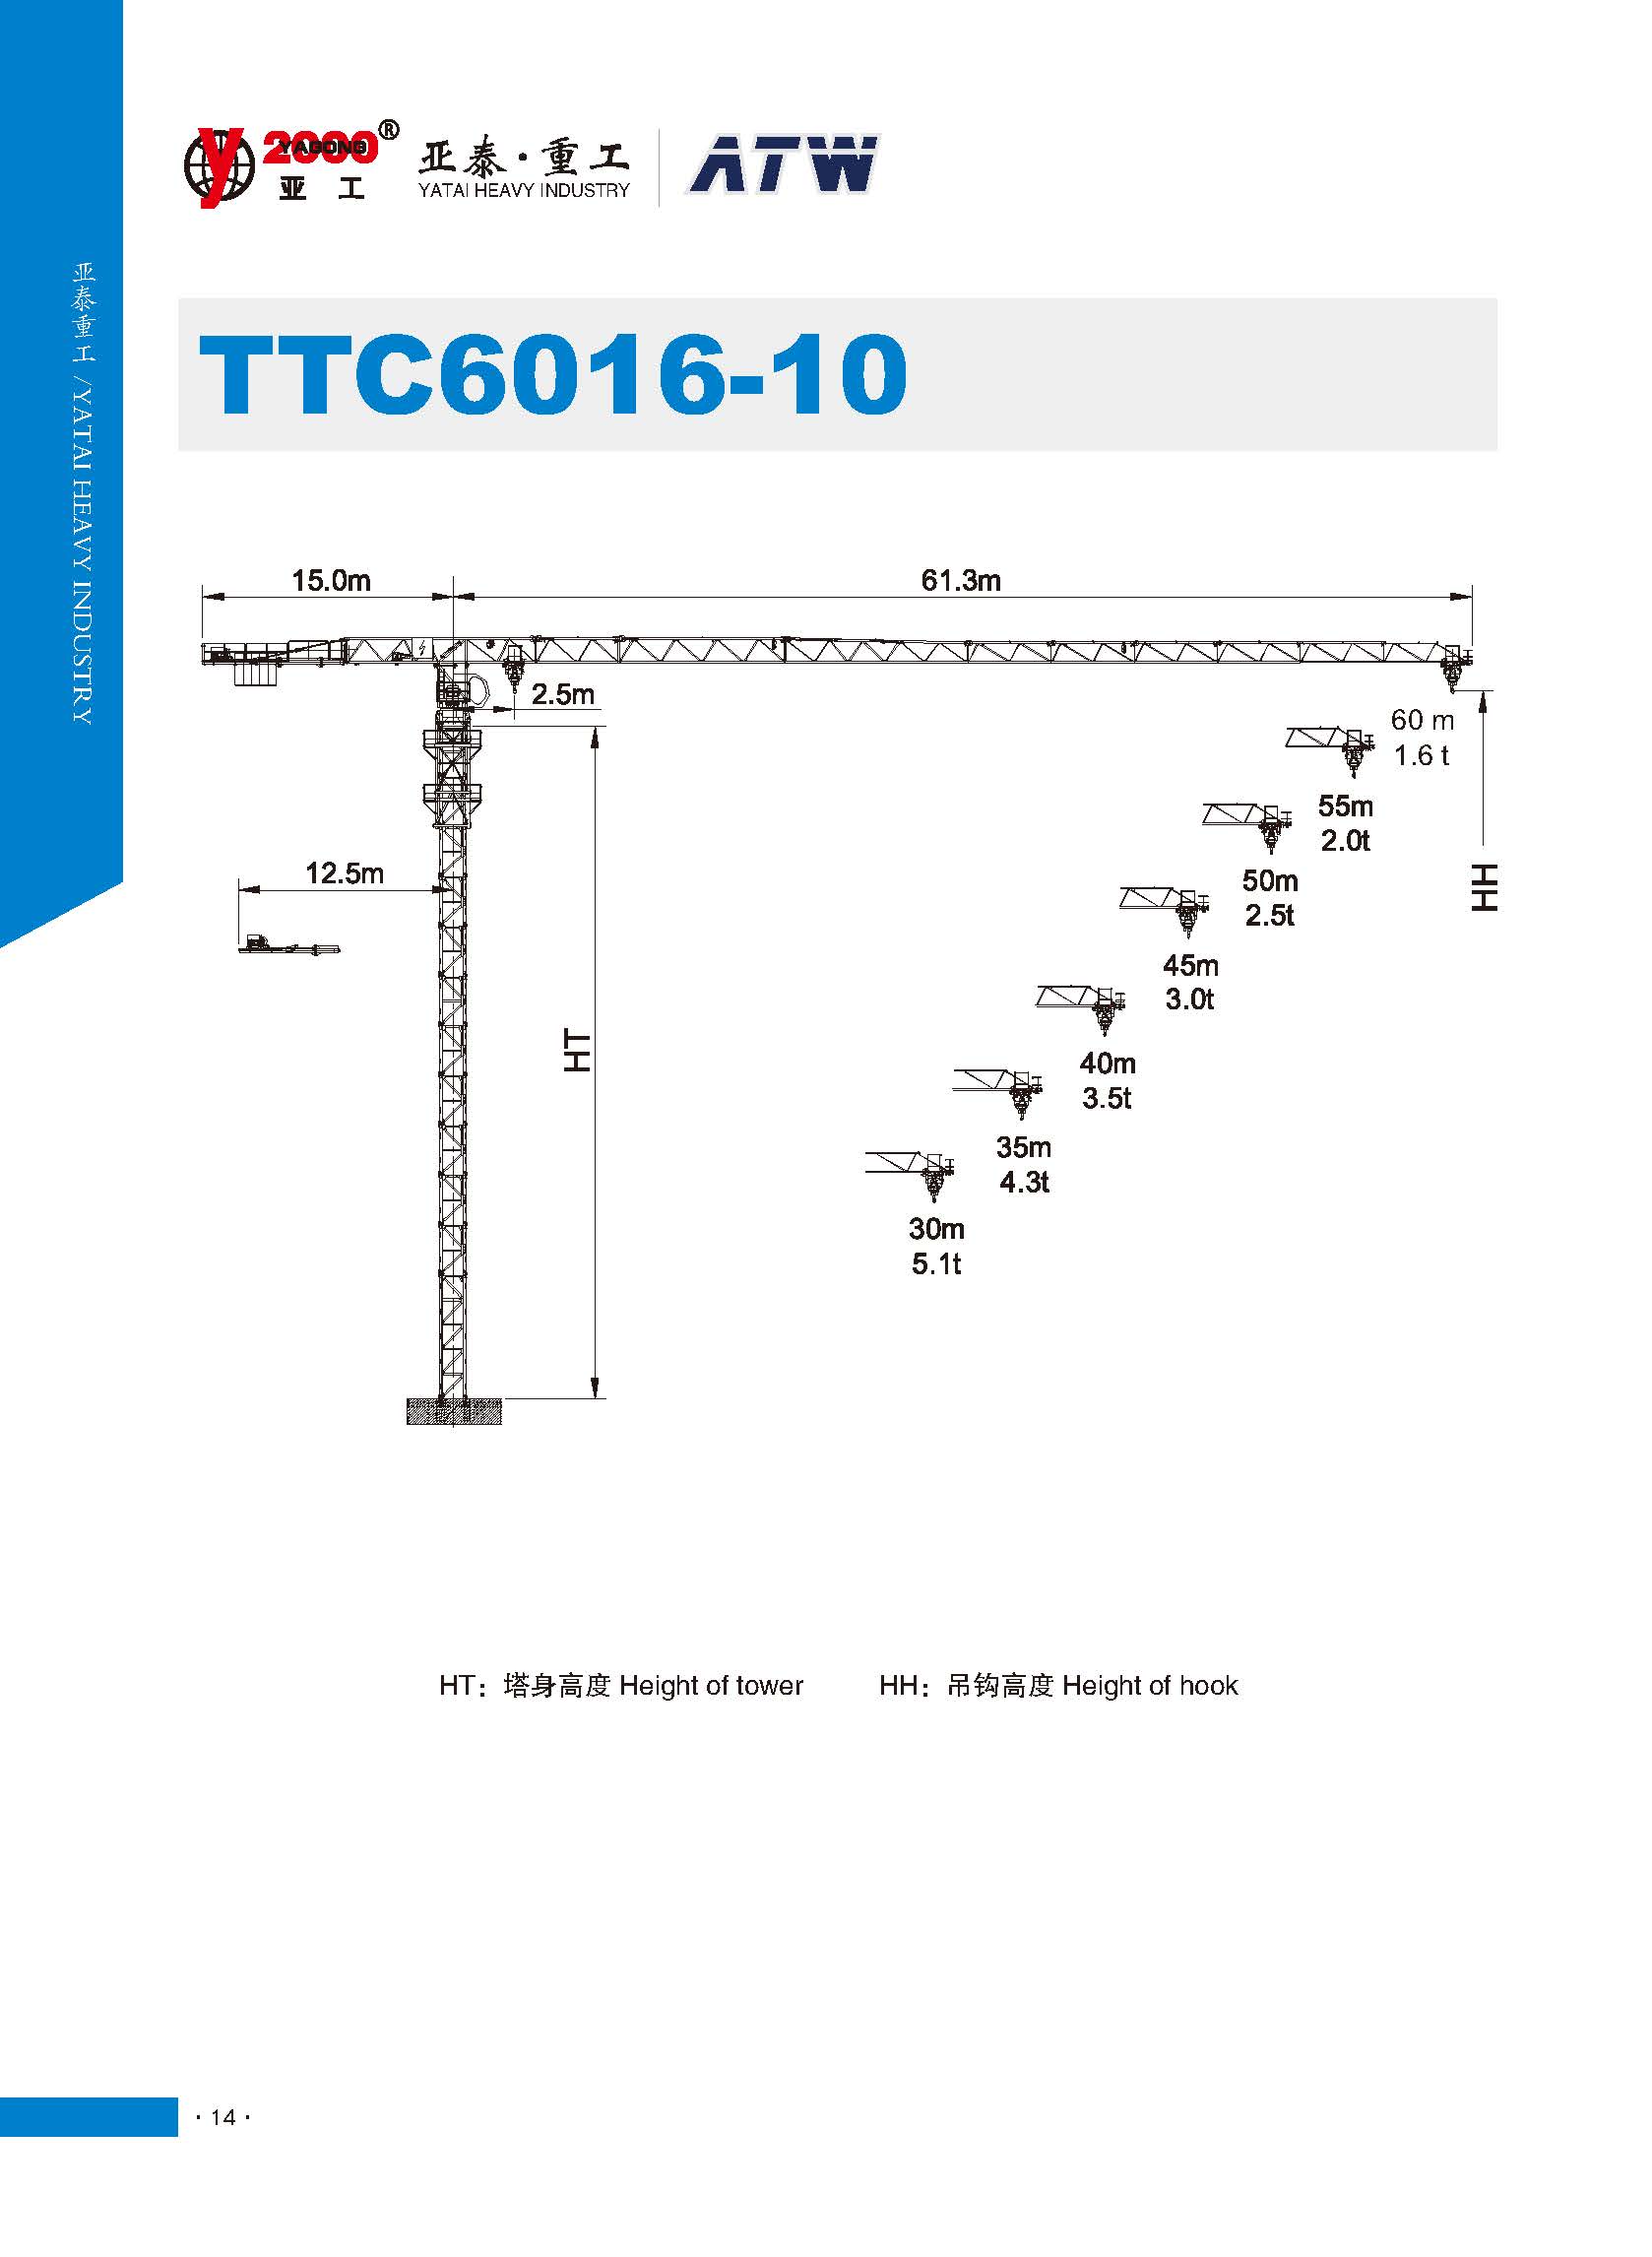 Topless Tower Crane TTC6016-10